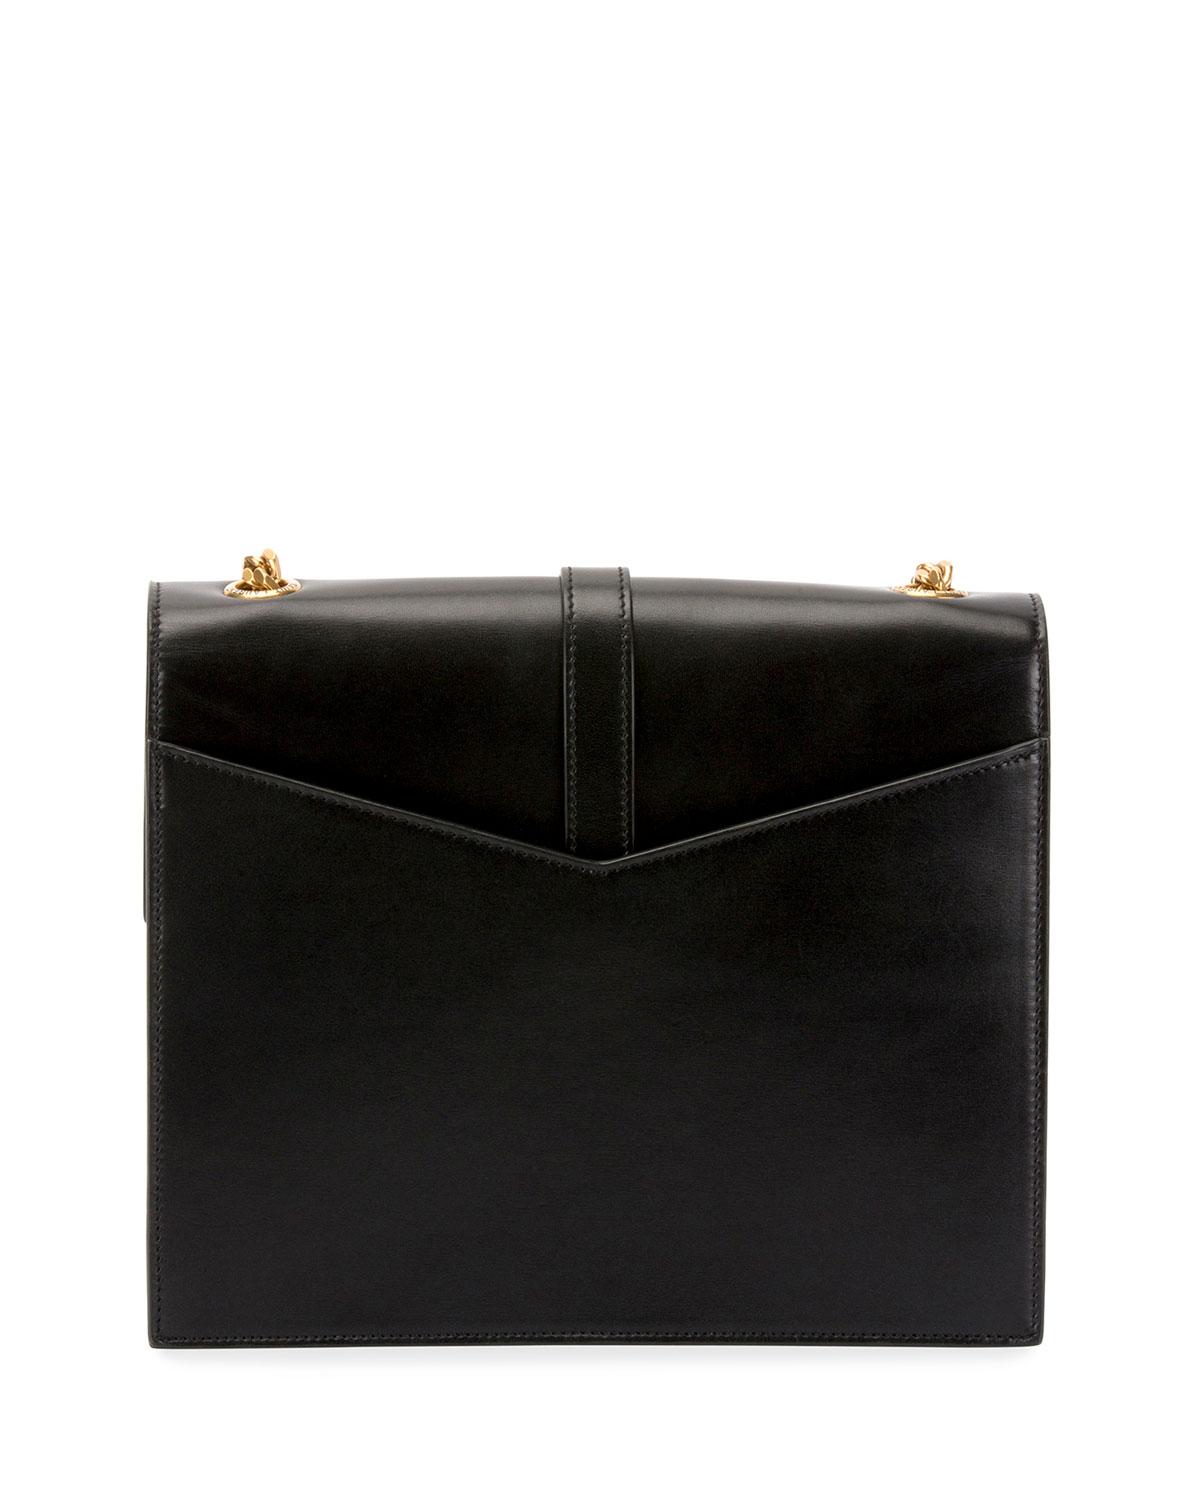 Saint Laurent Sulpice Medium Ysl Monogram Leather Triple V-flap Crossbody Bag in Black - Lyst